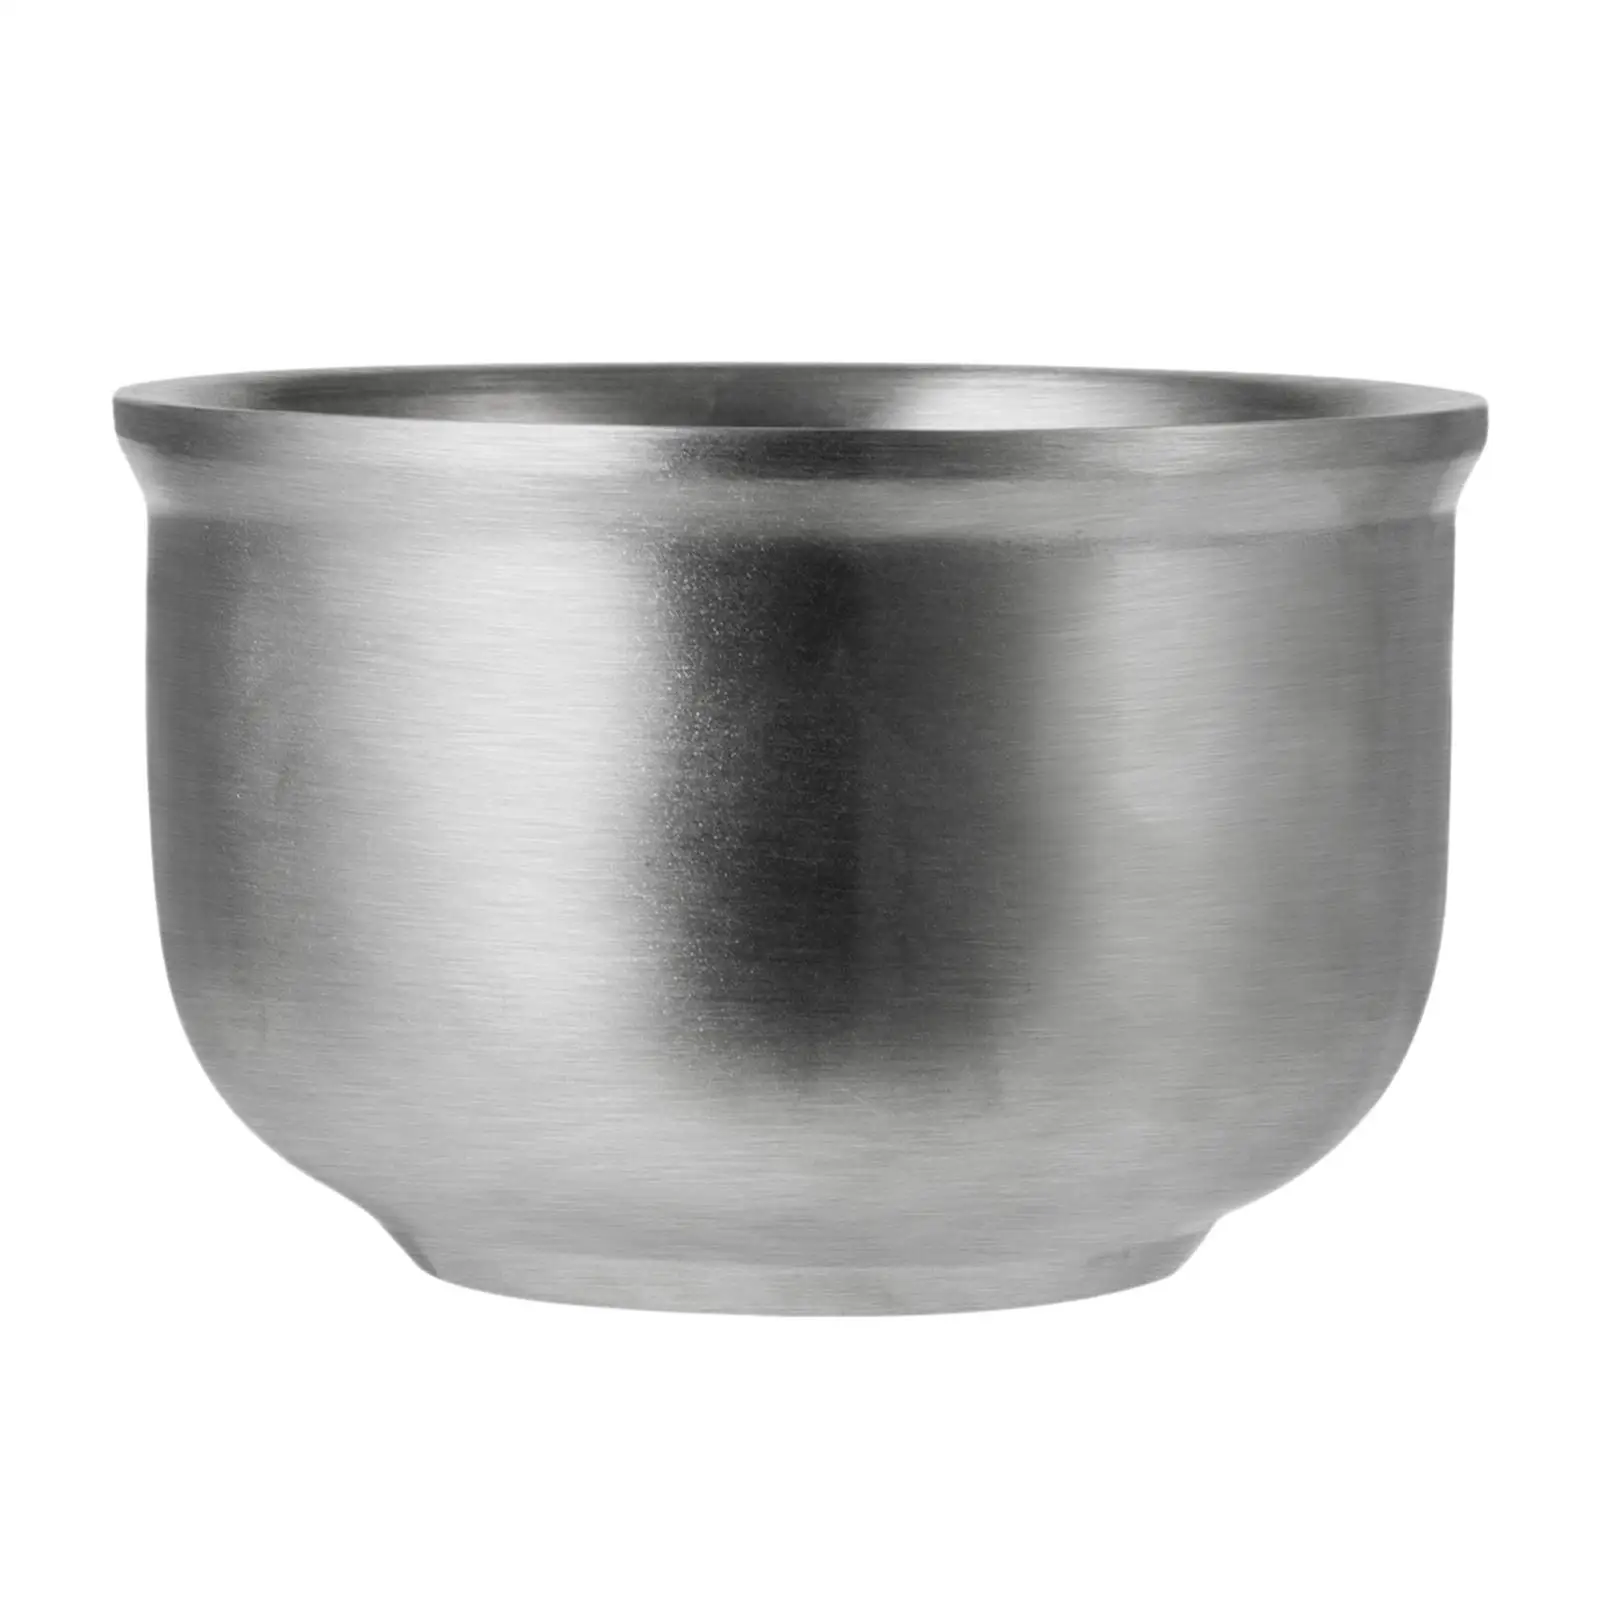 Shaving Bowl Fits Wet Shaving Small Stainless Steel Portable Heat Insulation Durable Shaving Mug Shave Soap Cup for Men Gift